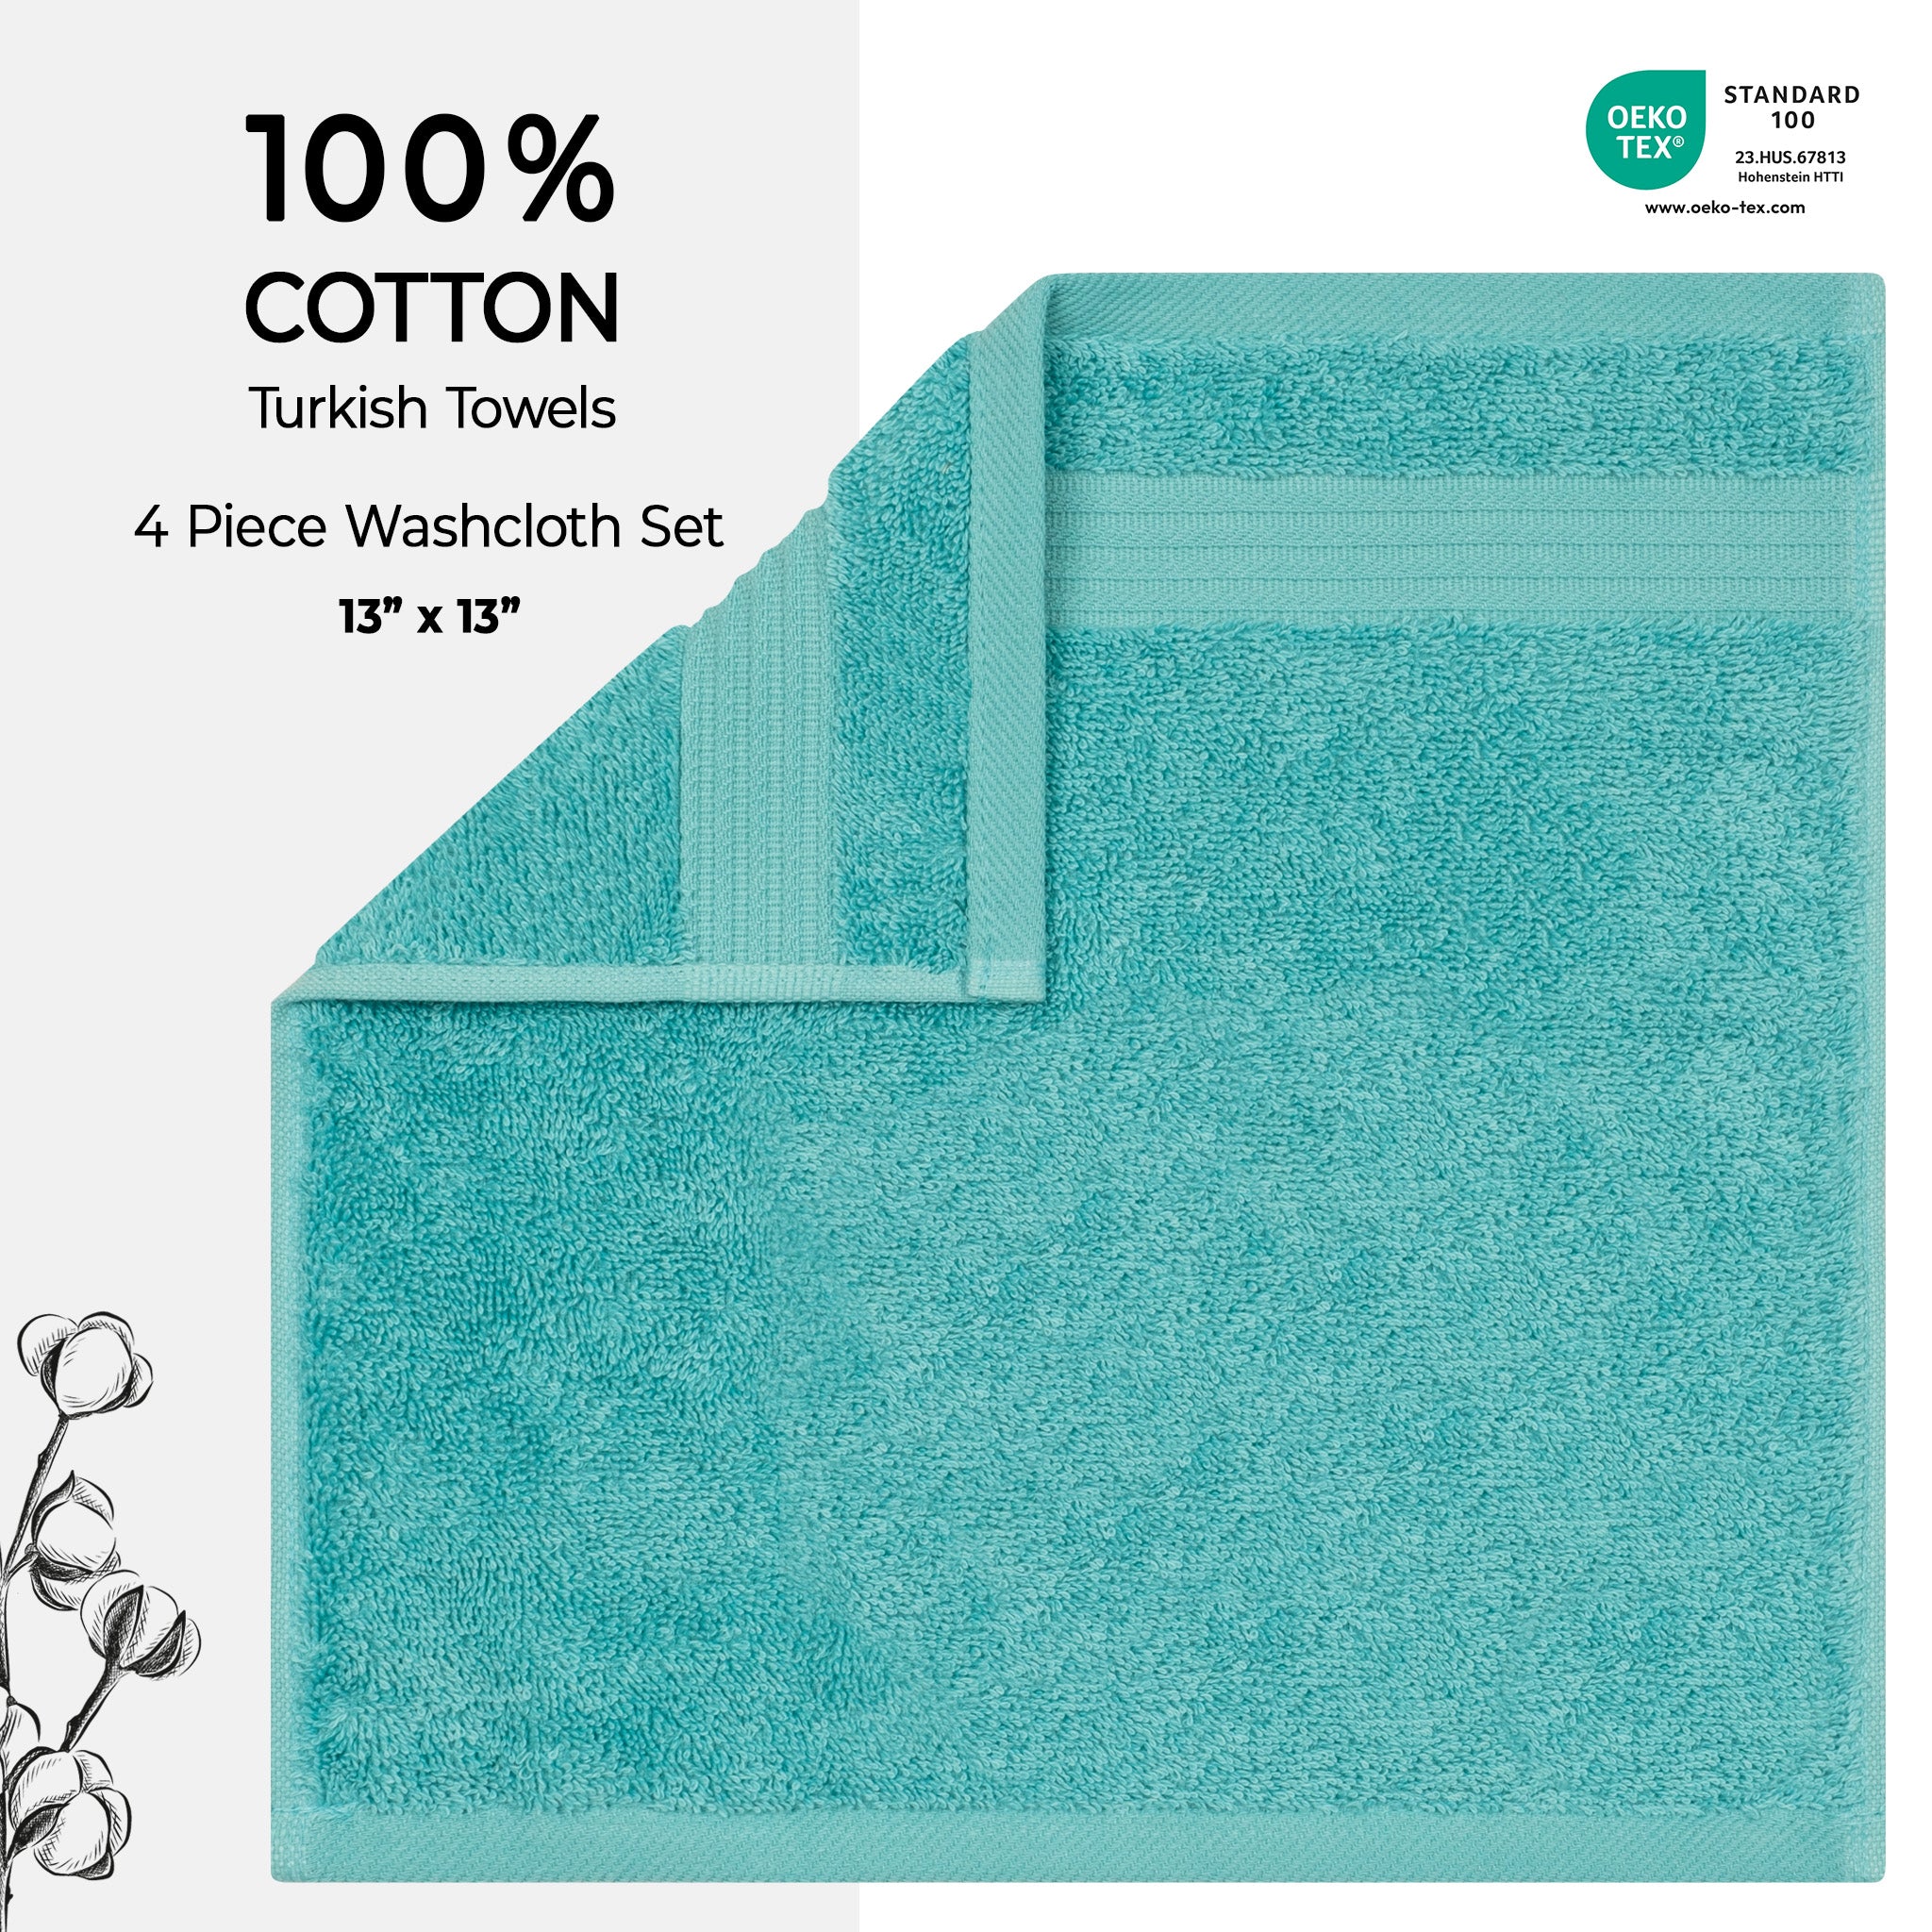 American Soft Linen Bekos 100% Cotton Turkish Towels, 4 Piece Washcloth Towel Set -turquoise-blue-02